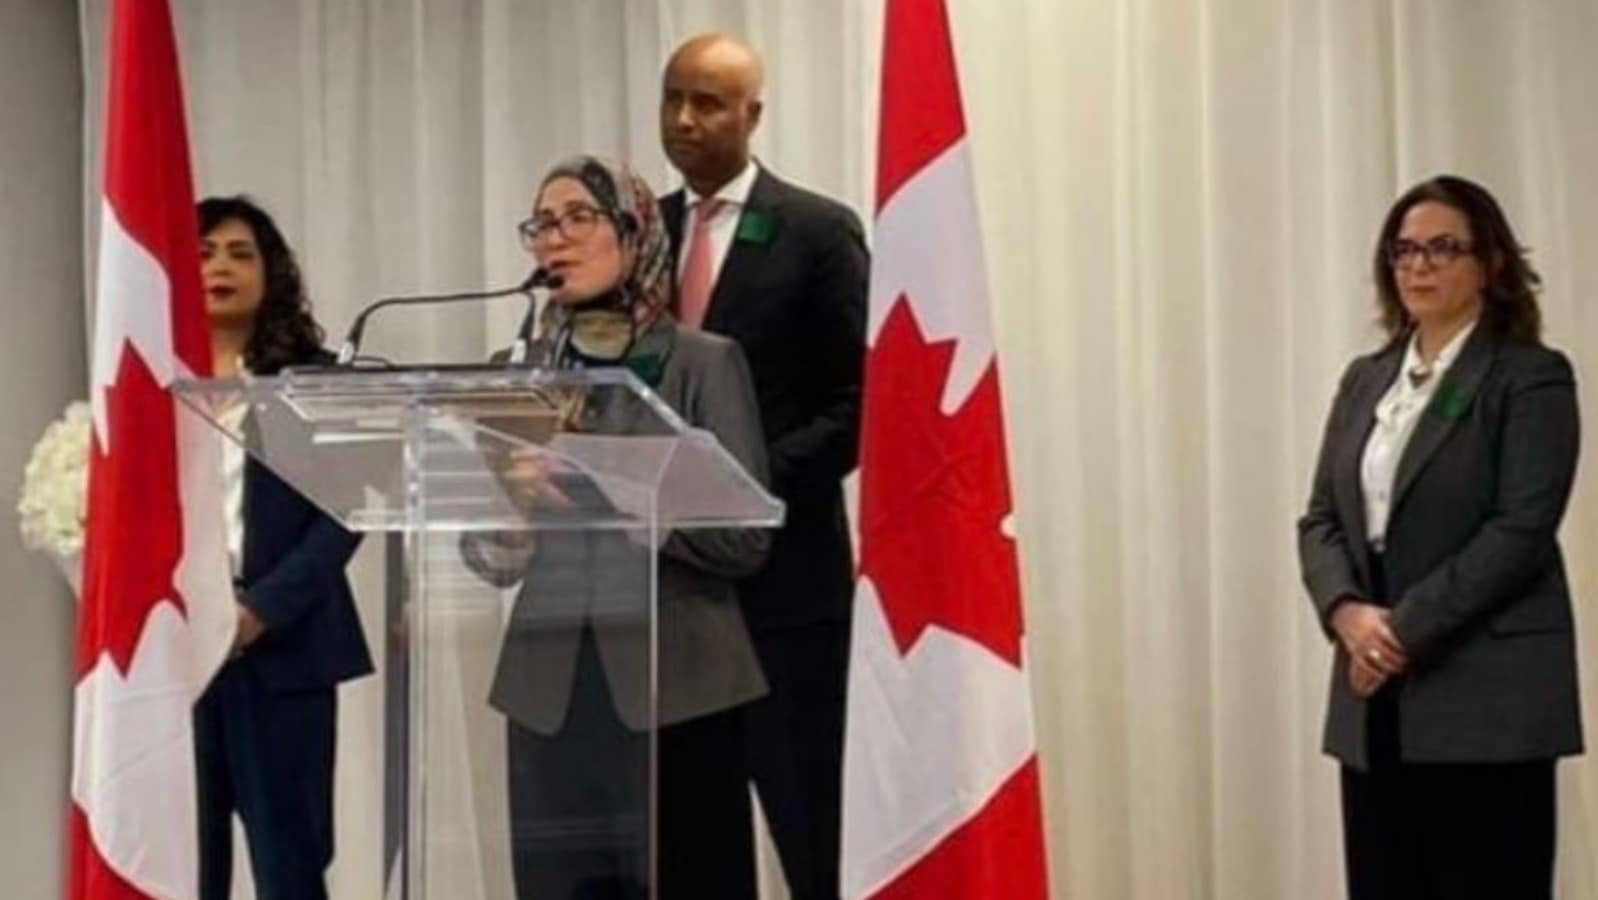 Amira Elghawaby is Canada's first anti-Islamophobia advisor